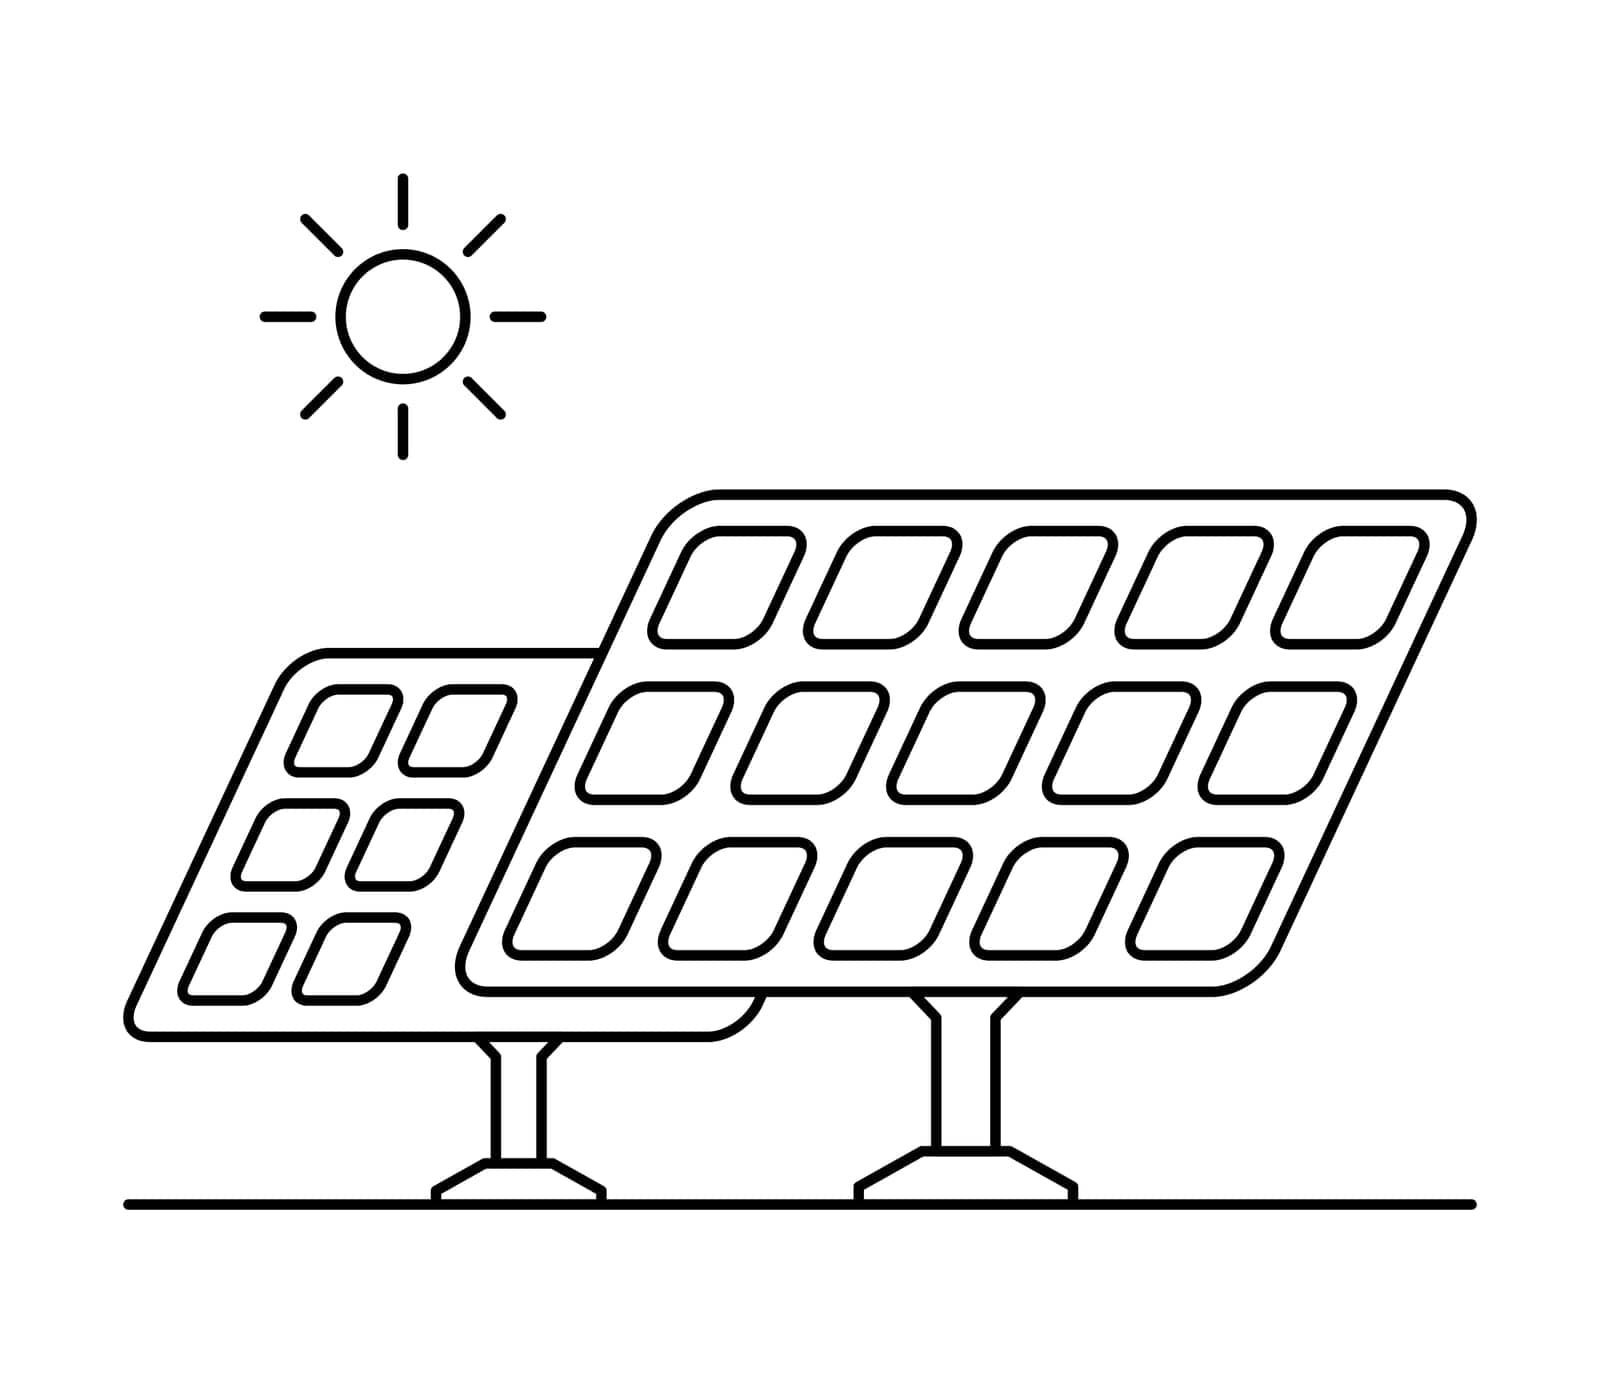 Solar power plant. Line art green energy.